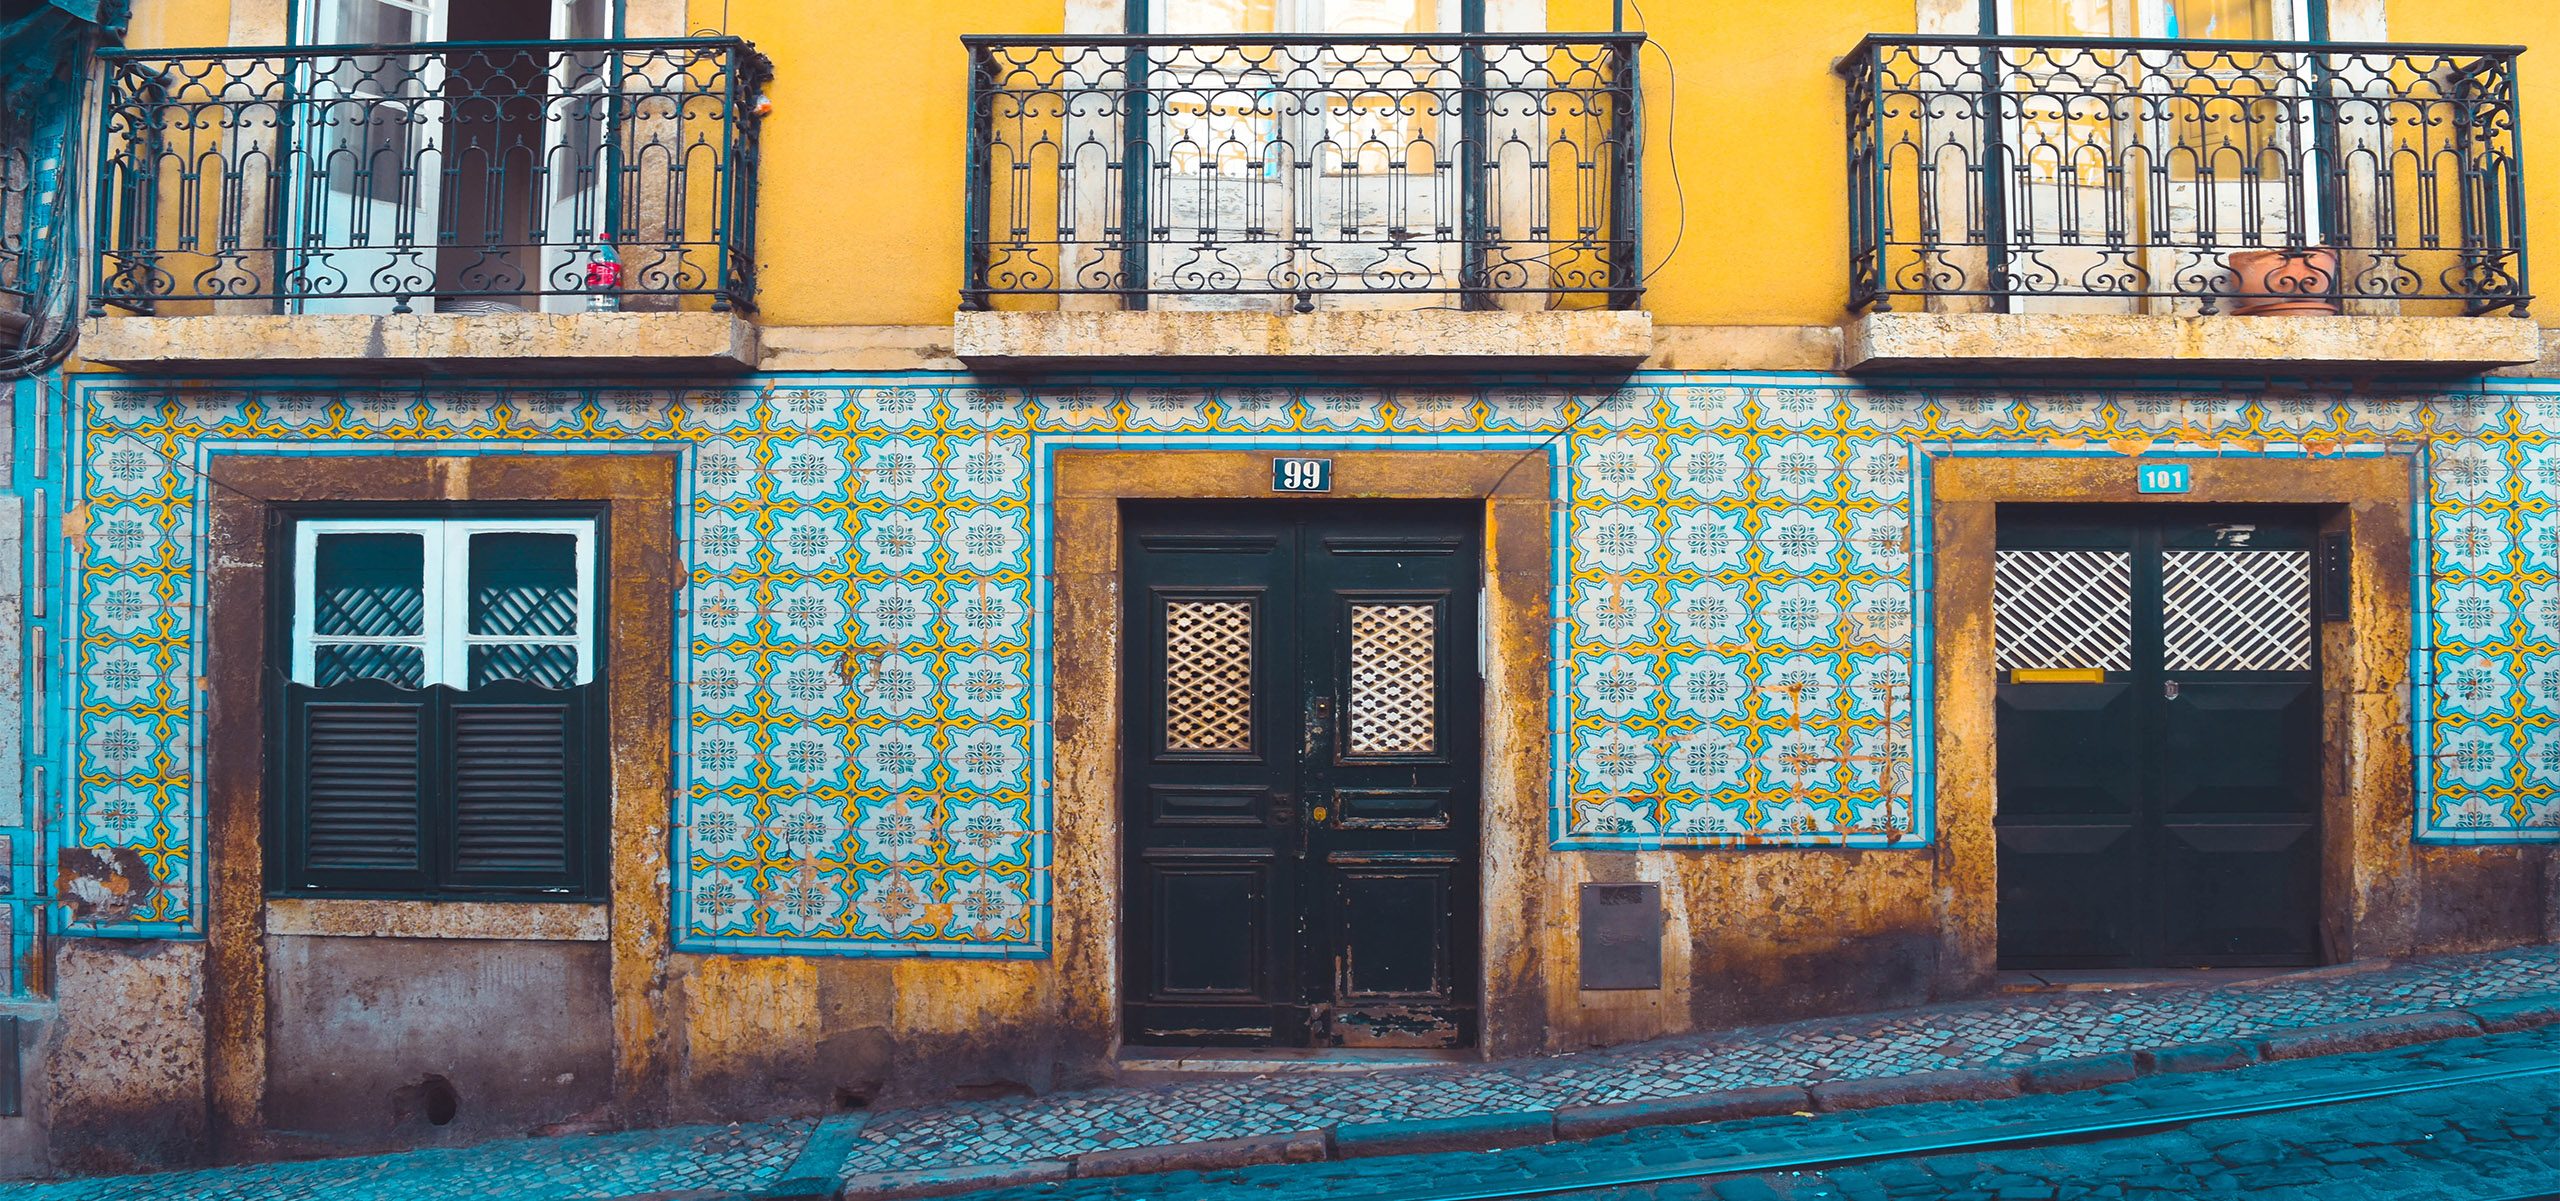 Portugal - Lisbon - Street Decoration